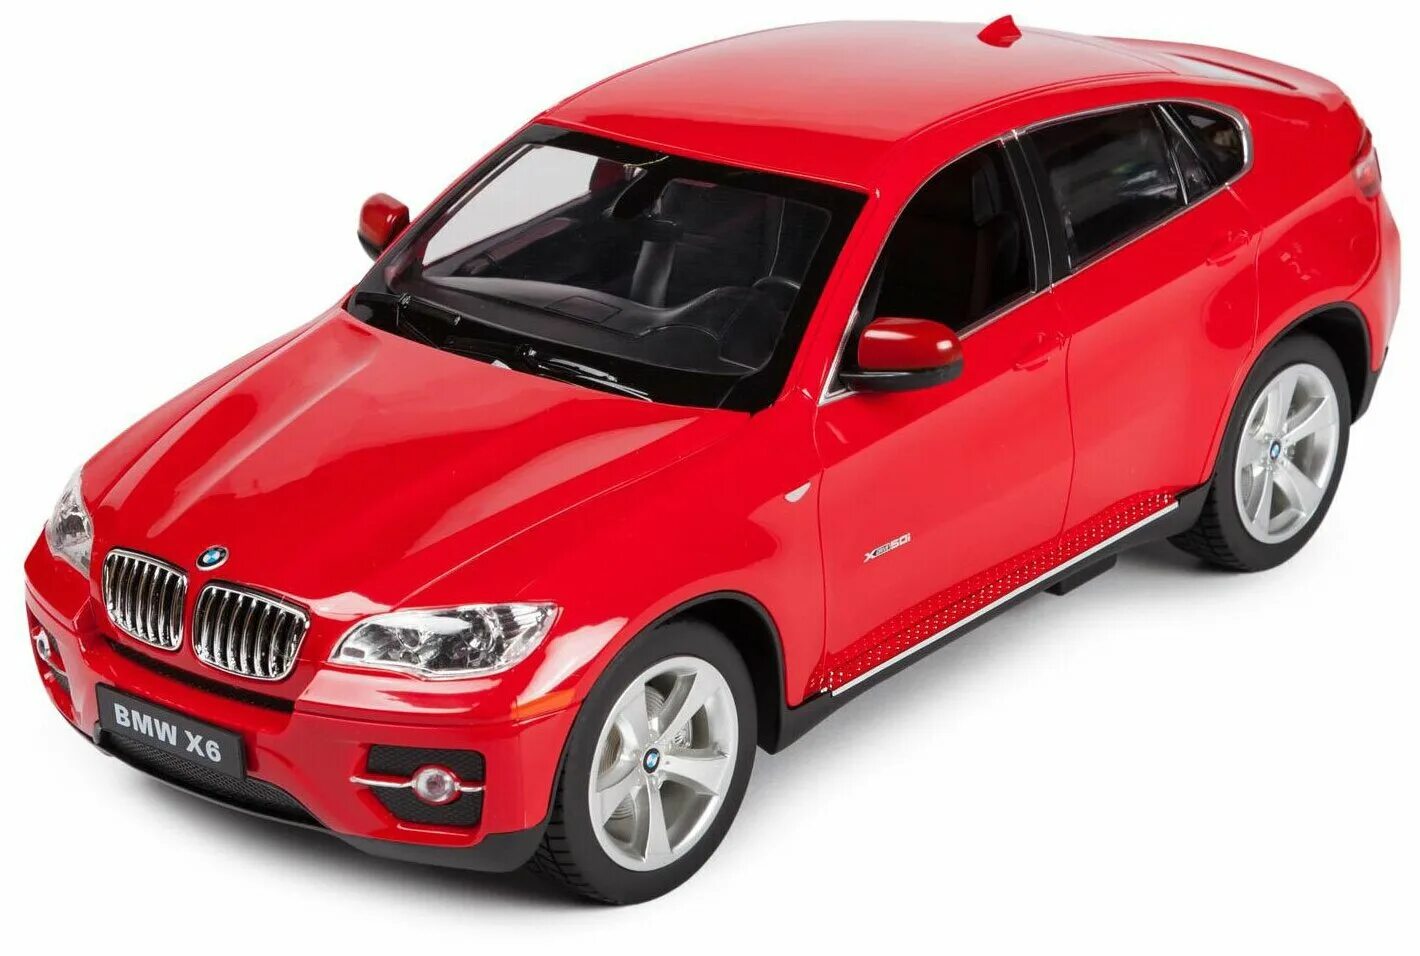 Rastar BMW x6. Красная машина BMW x6. Машина р/у 1:14 BMW x6, 45,5х21,5х19,5см, цвет красный 40mhz. Модель игрушка БМВ x6. Бмв игрушки купить